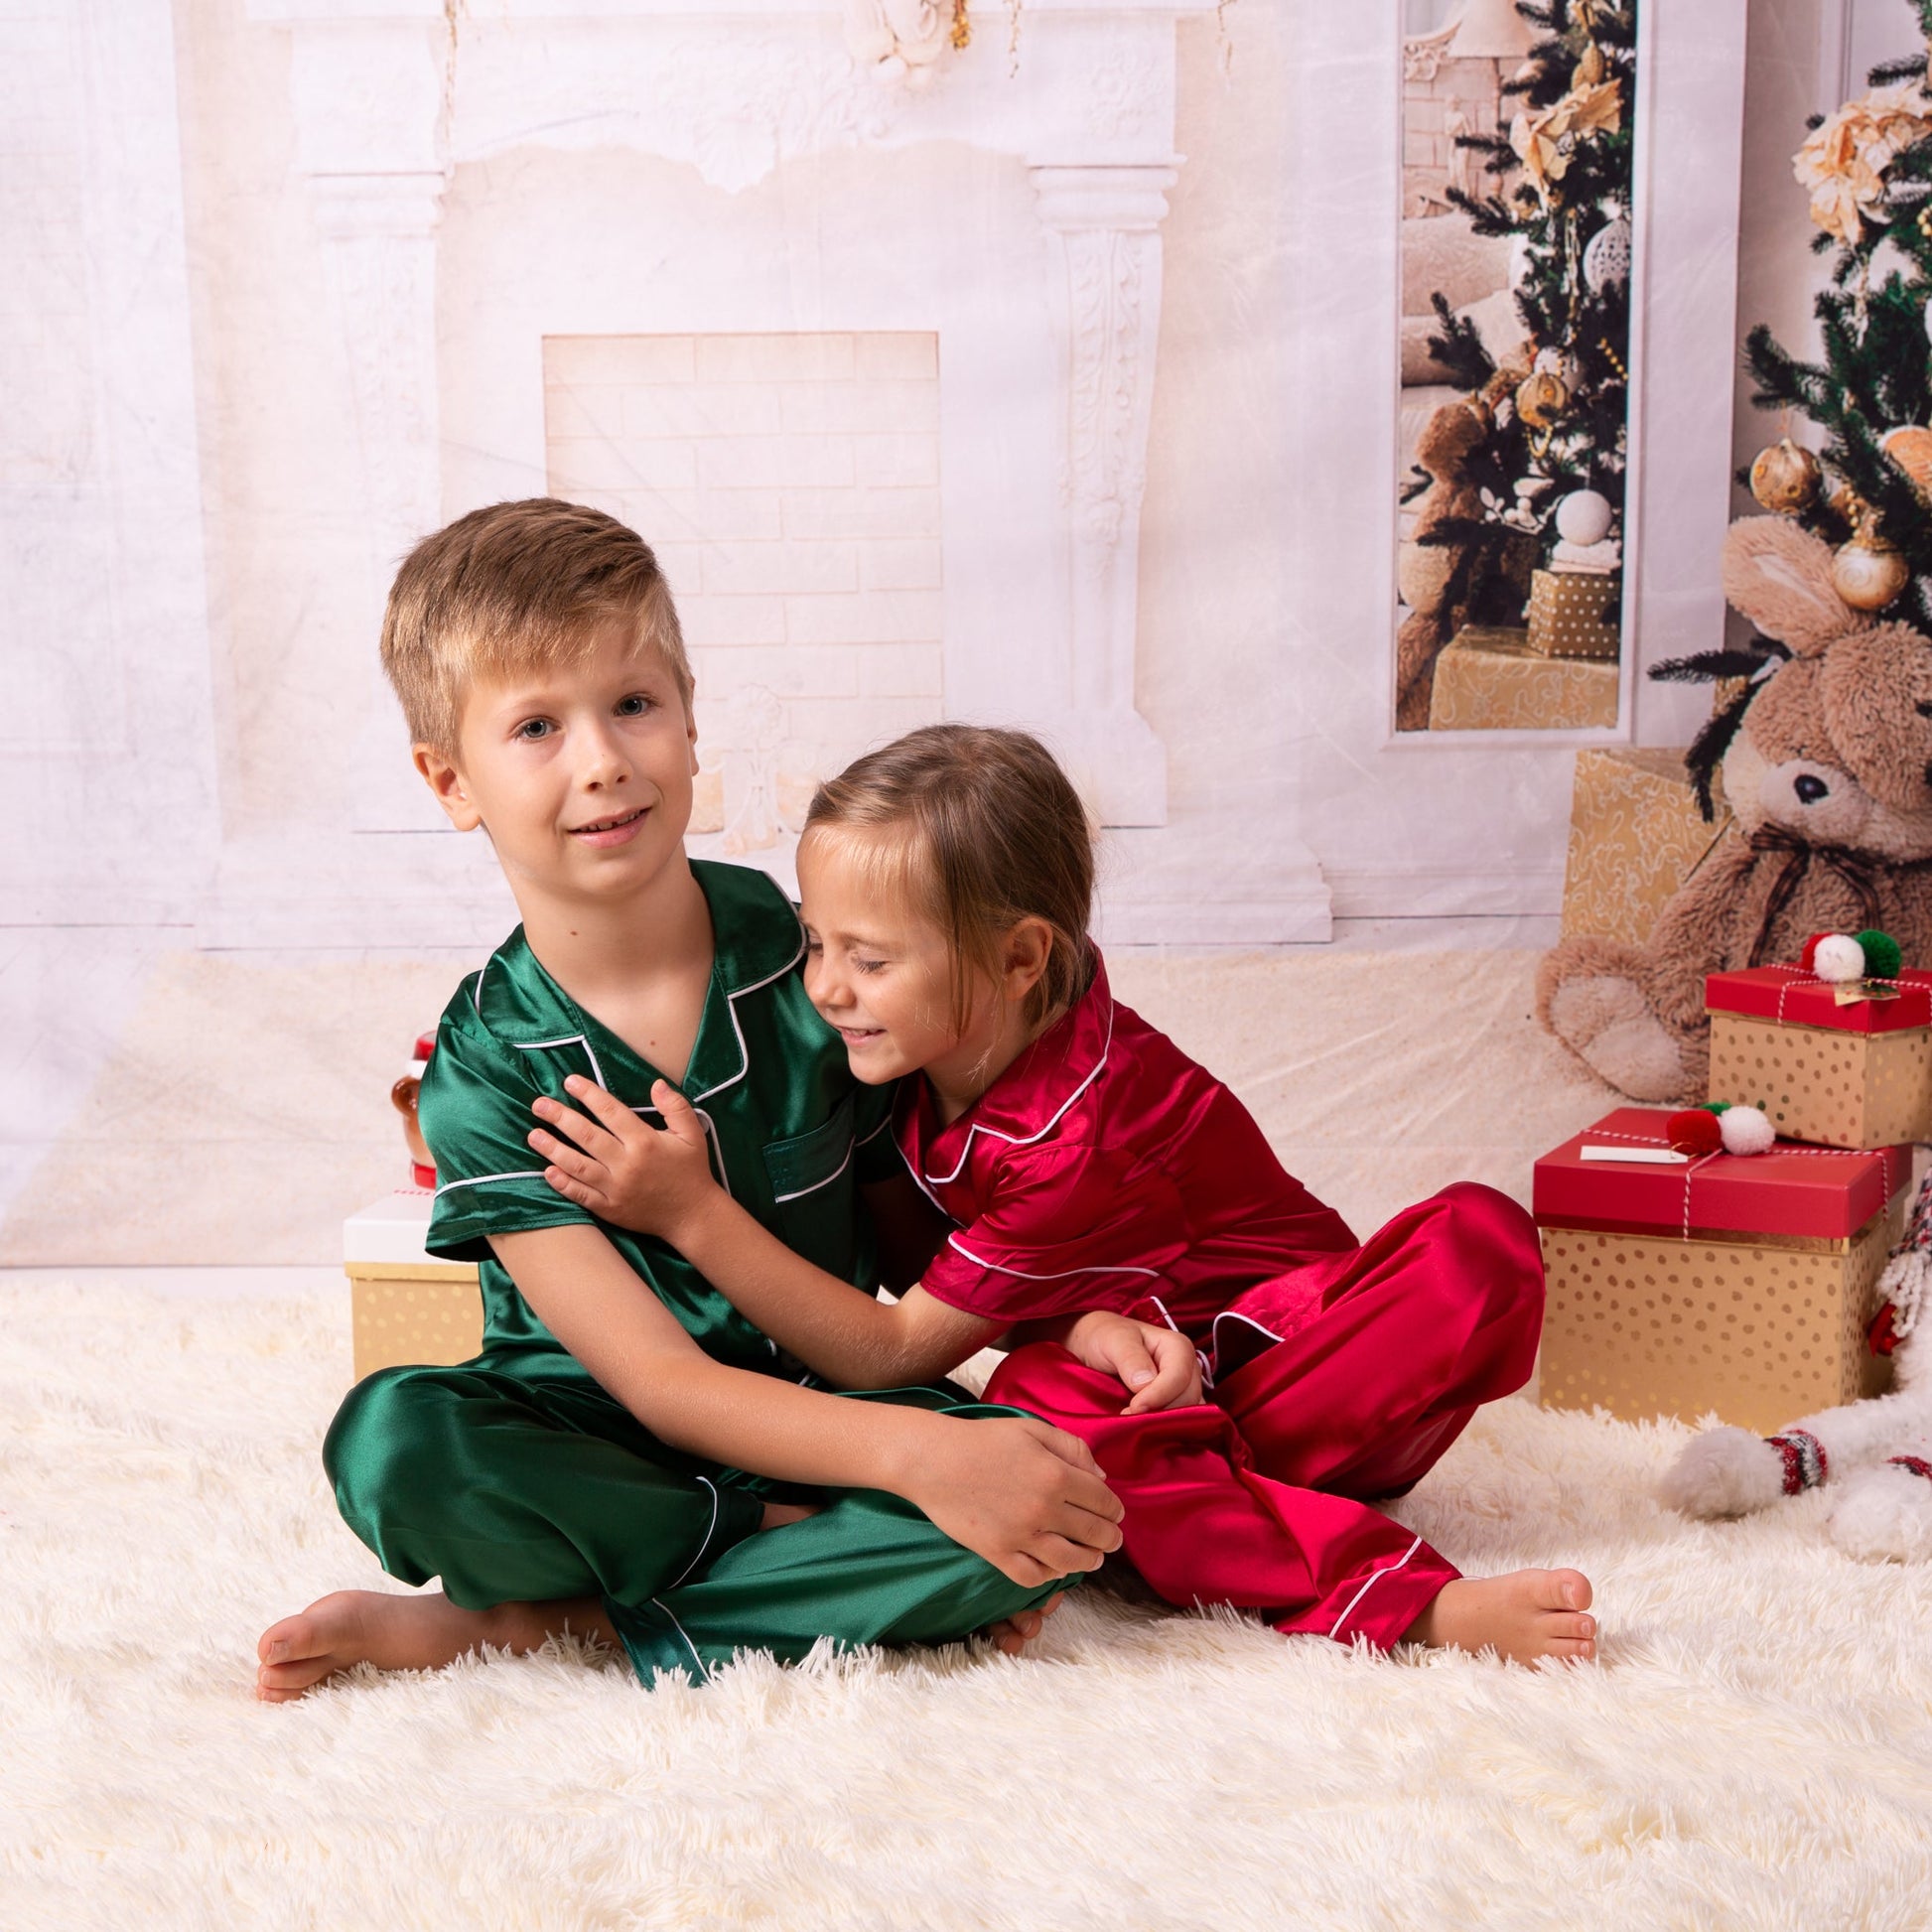 Christmas Family Matching Satin Pajama Sets Long Sleeves + 